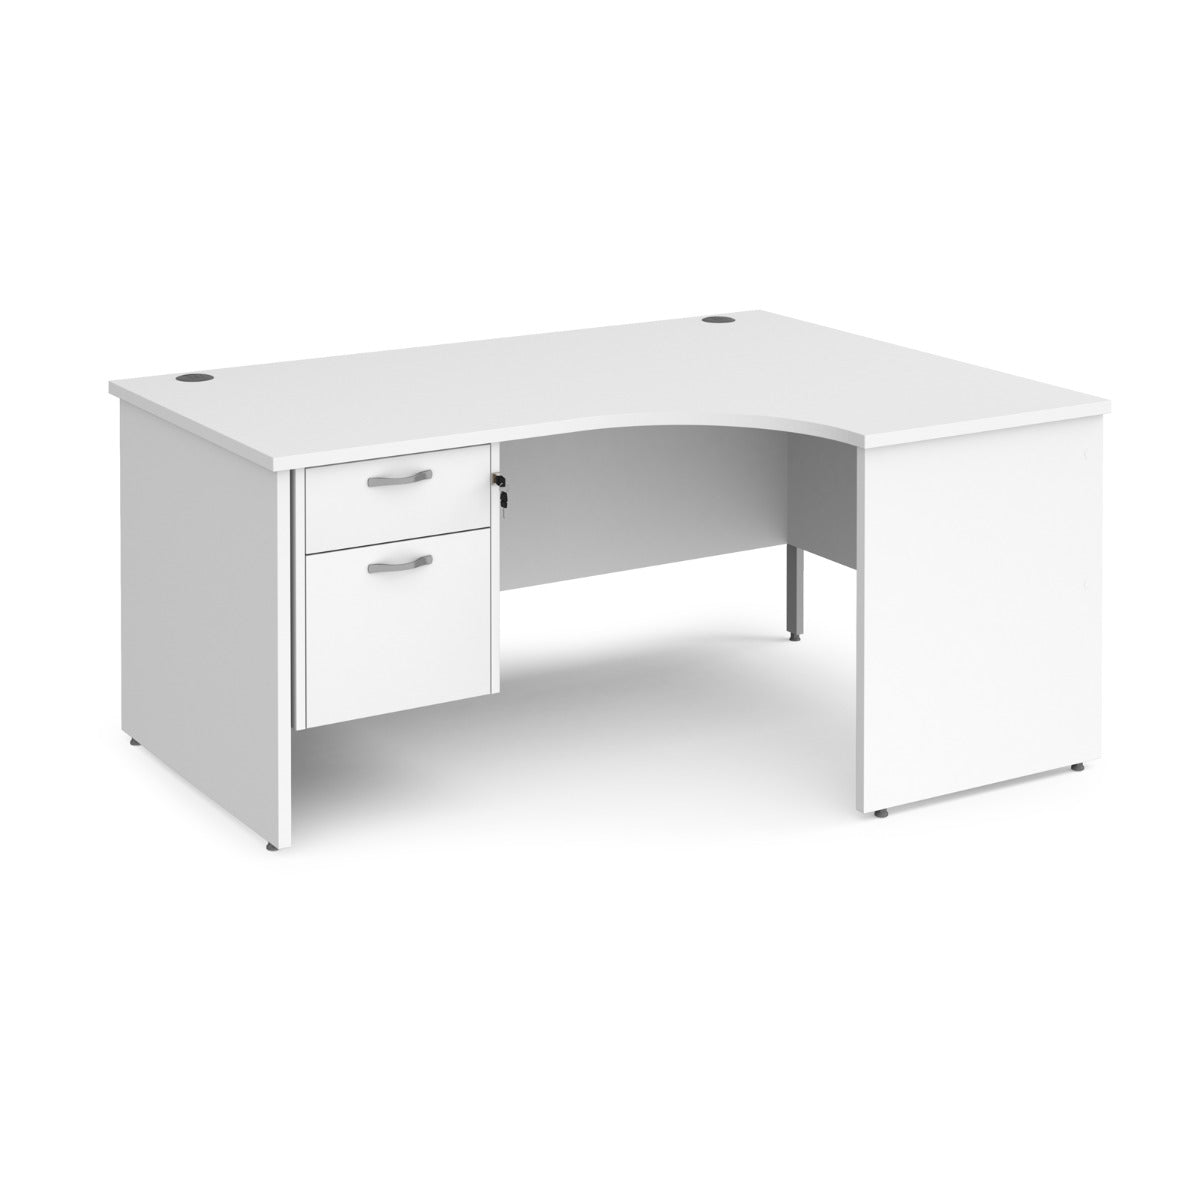 Maestro Panel Leg Right Hand Ergonomic Corner Office Desk with Two Drawer Pedestal